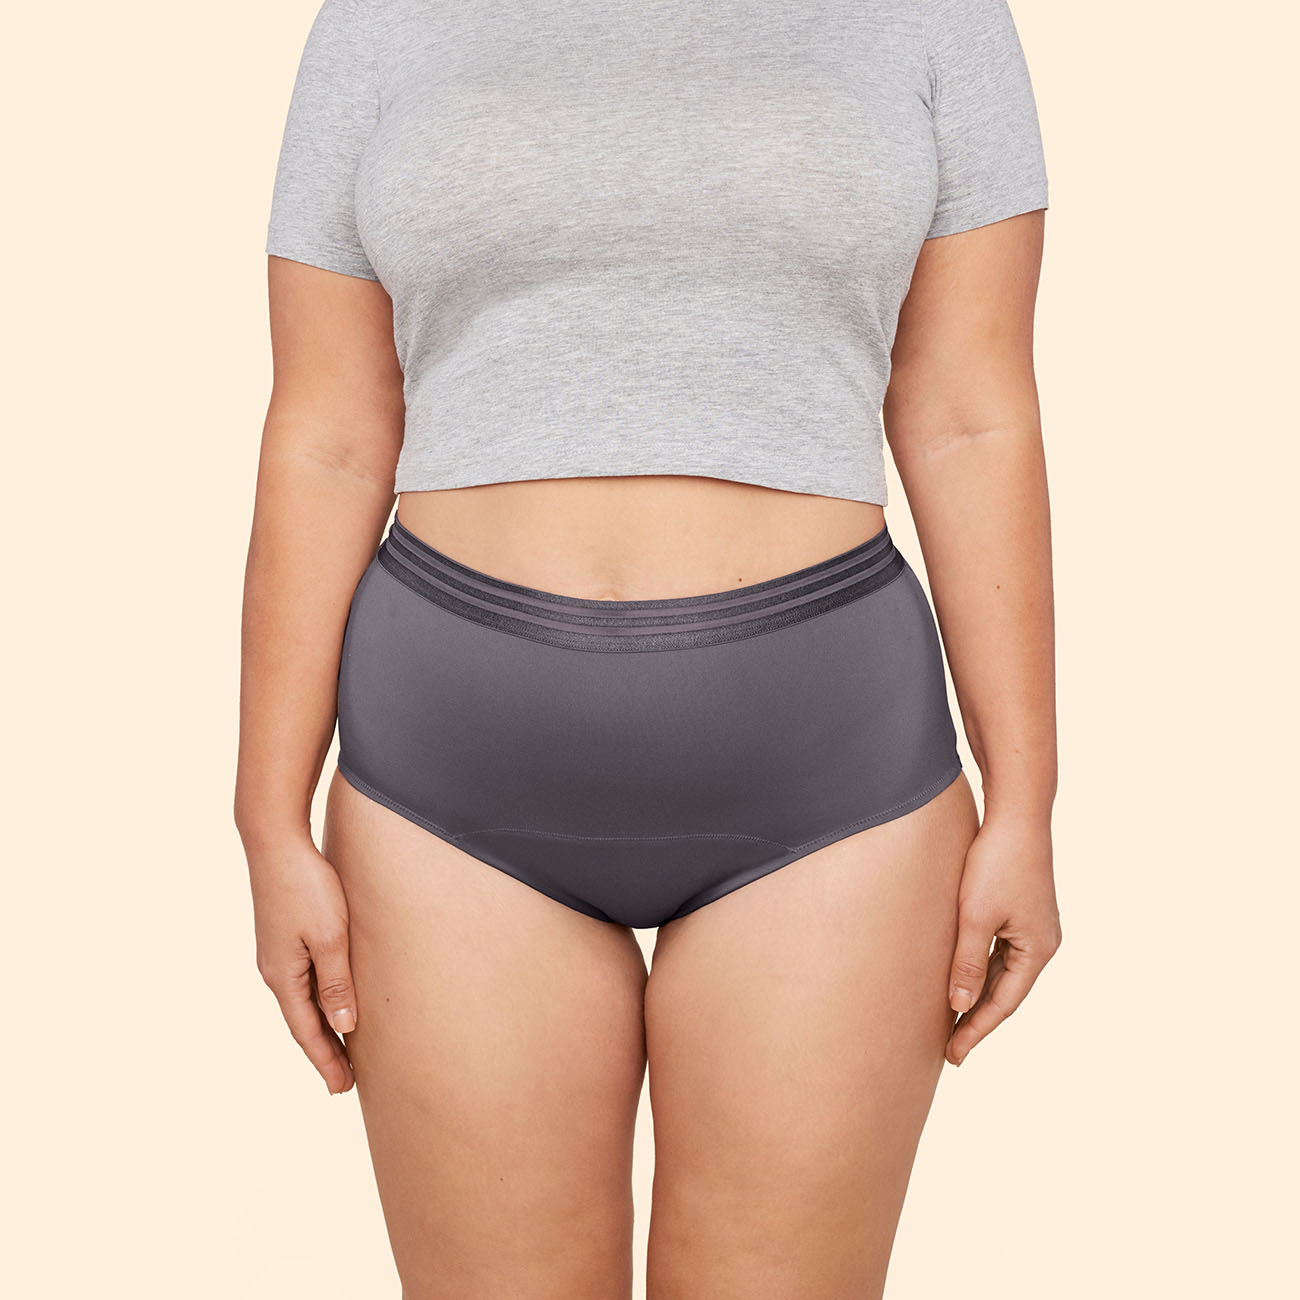  Speax by Thinx Hiphugger Incontinence Underwear for Women,  Washable Incontinence Underwear Women, Postpartum Underwear Feminine Care,  Beige, X-Small : Health & Household